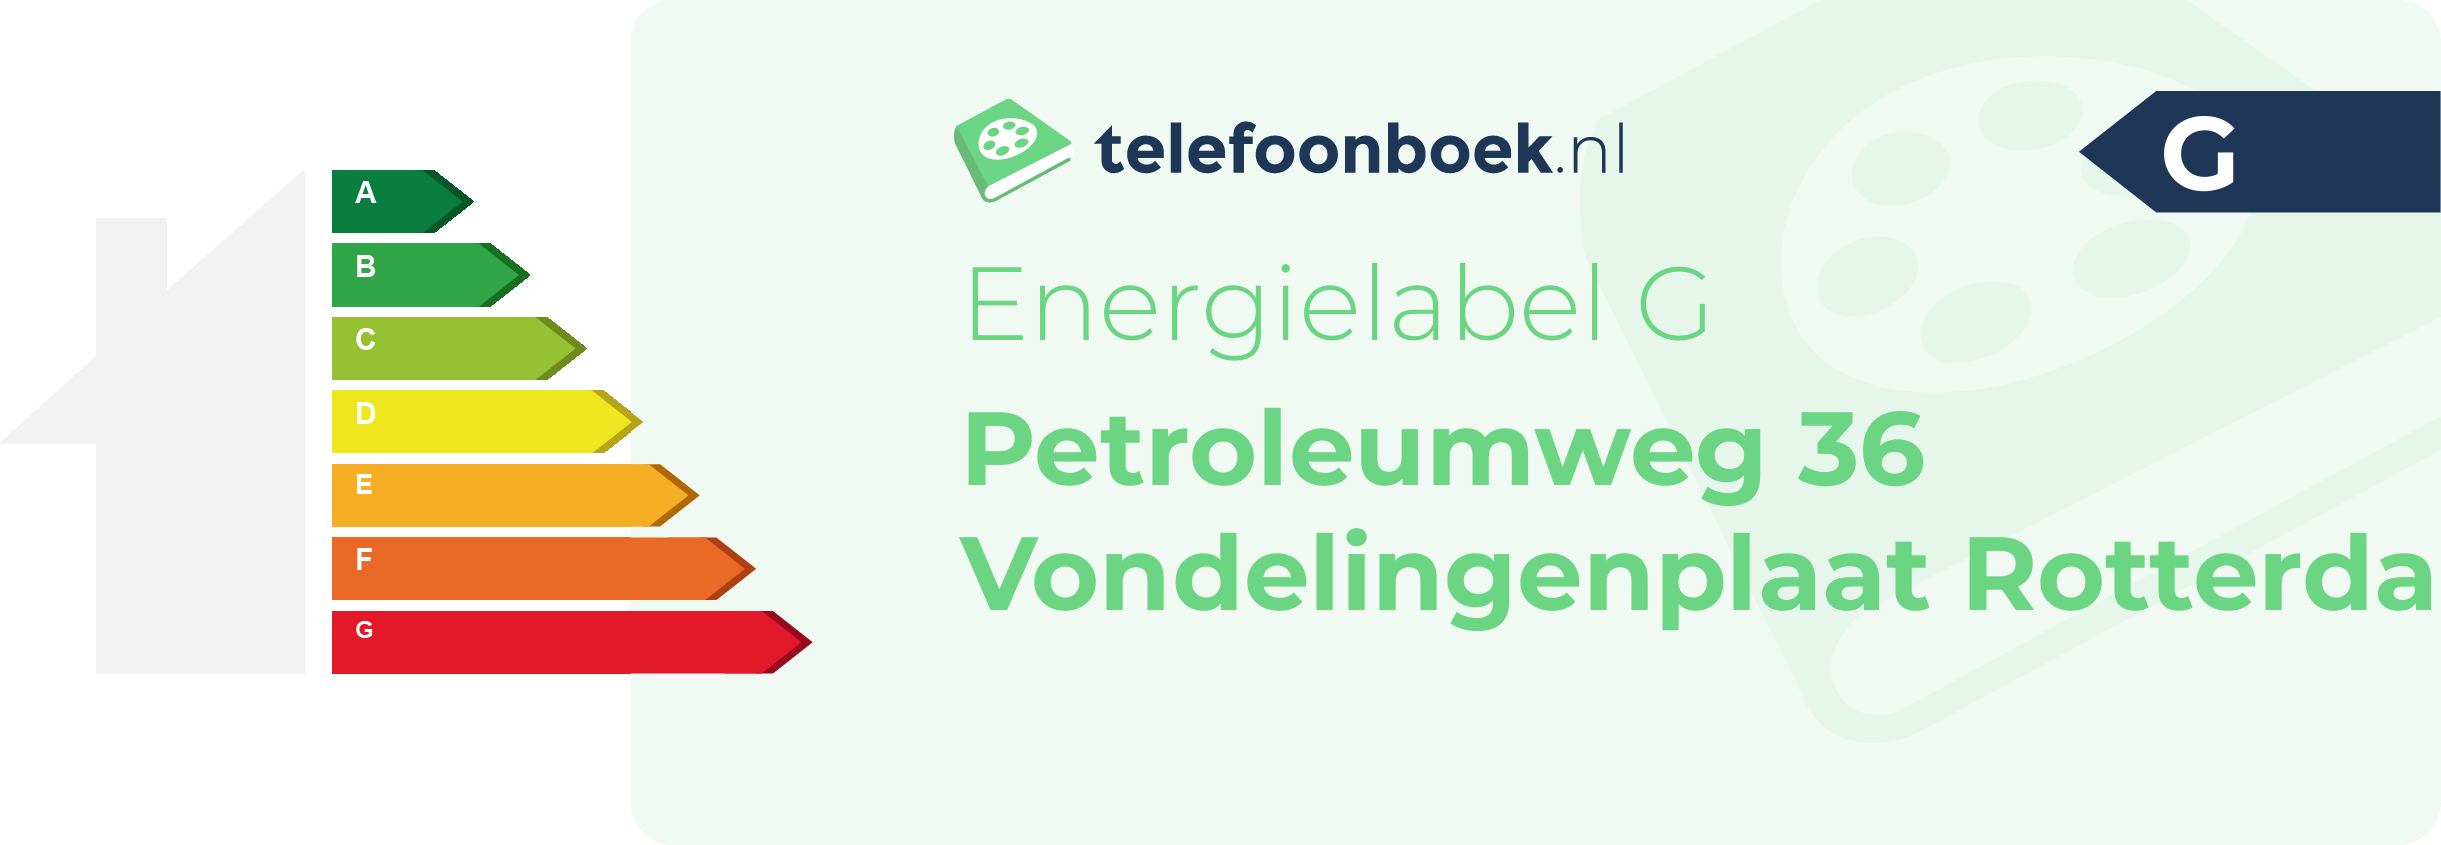 Energielabel Petroleumweg 36 Vondelingenplaat Rotterdam